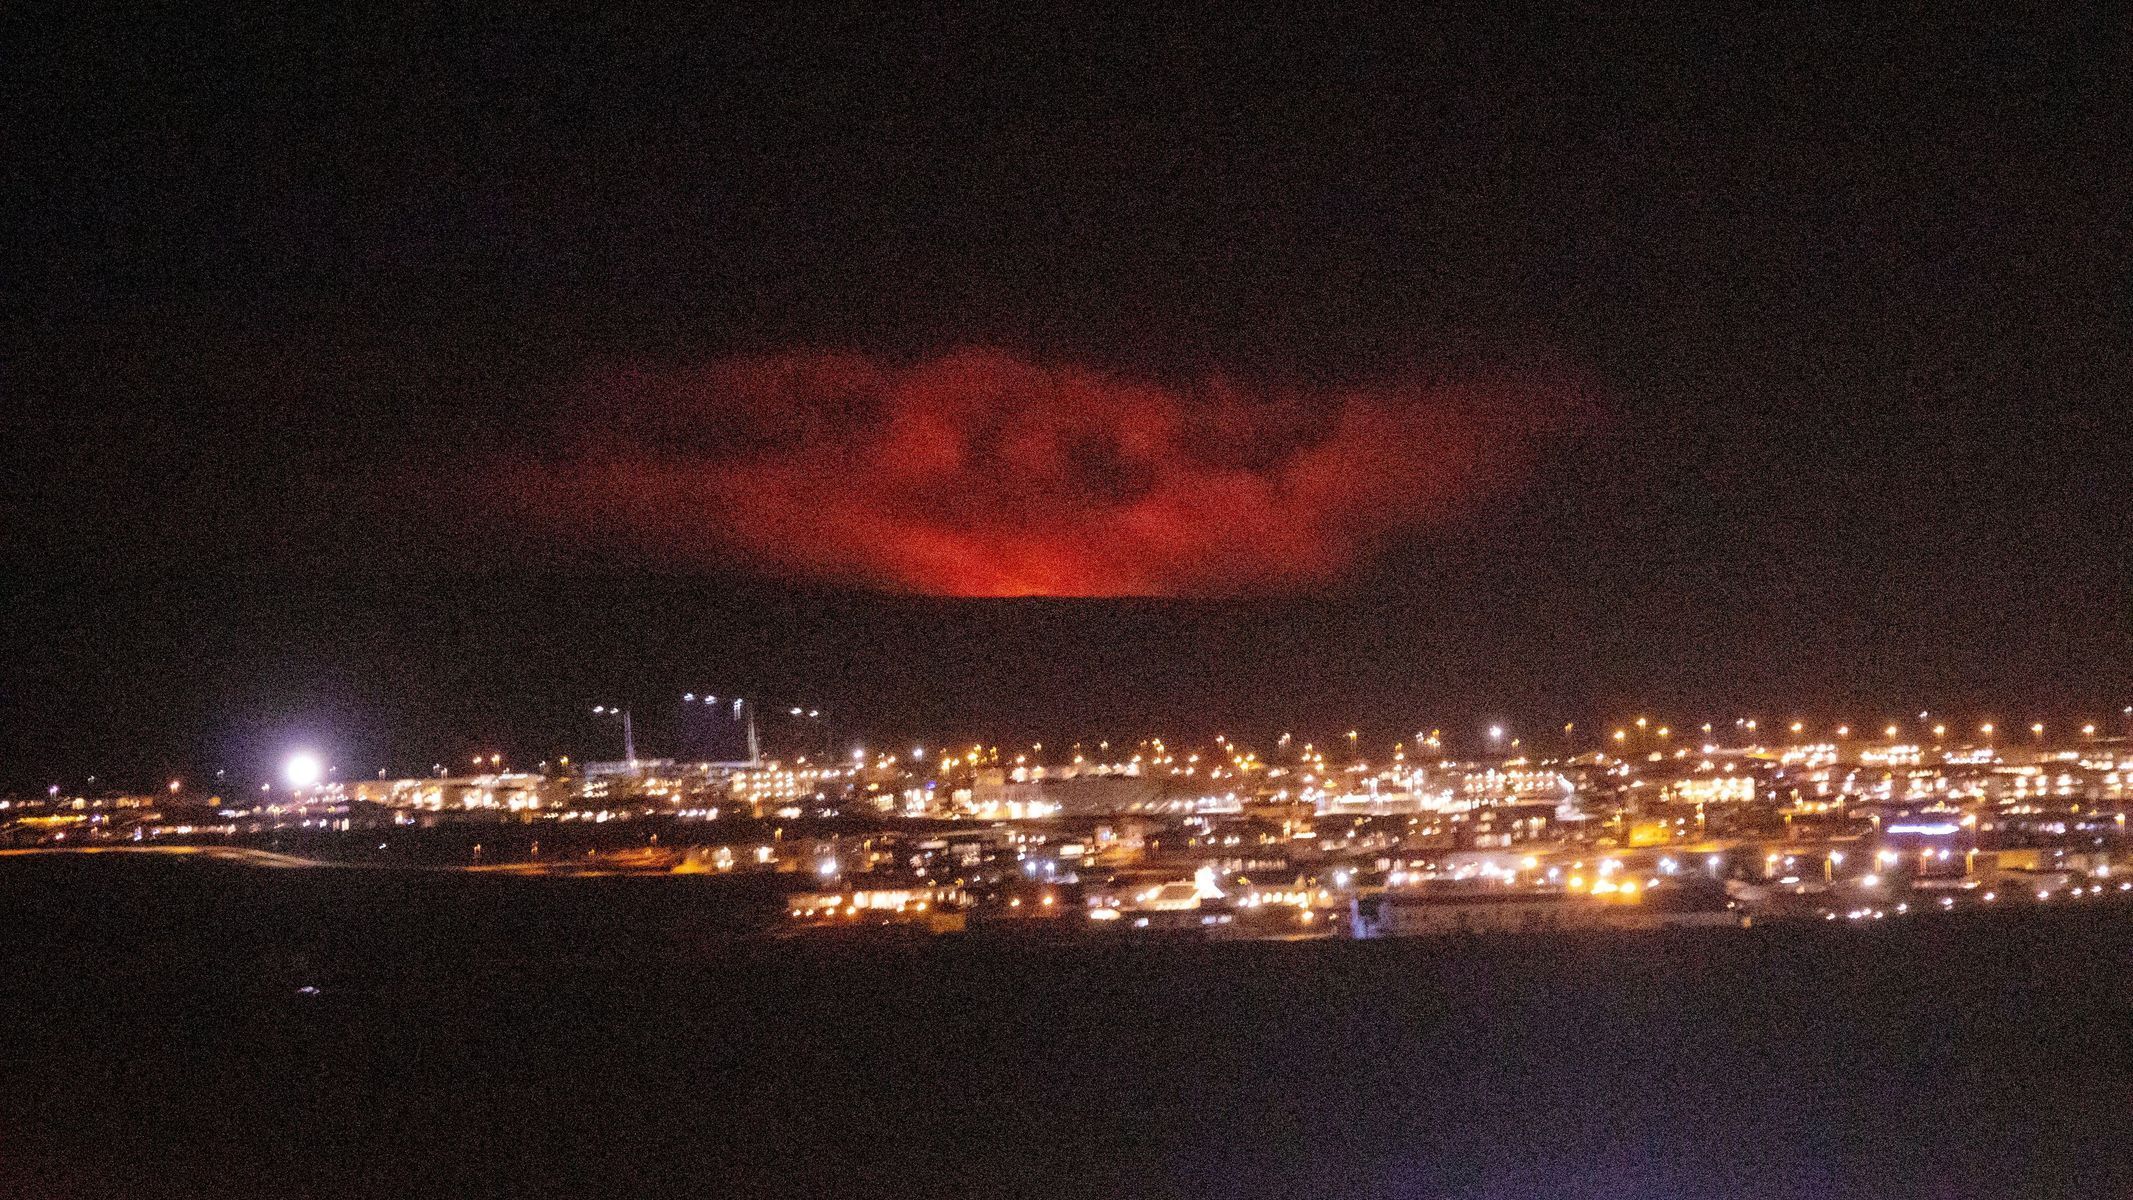 island sopka výbuch erupce